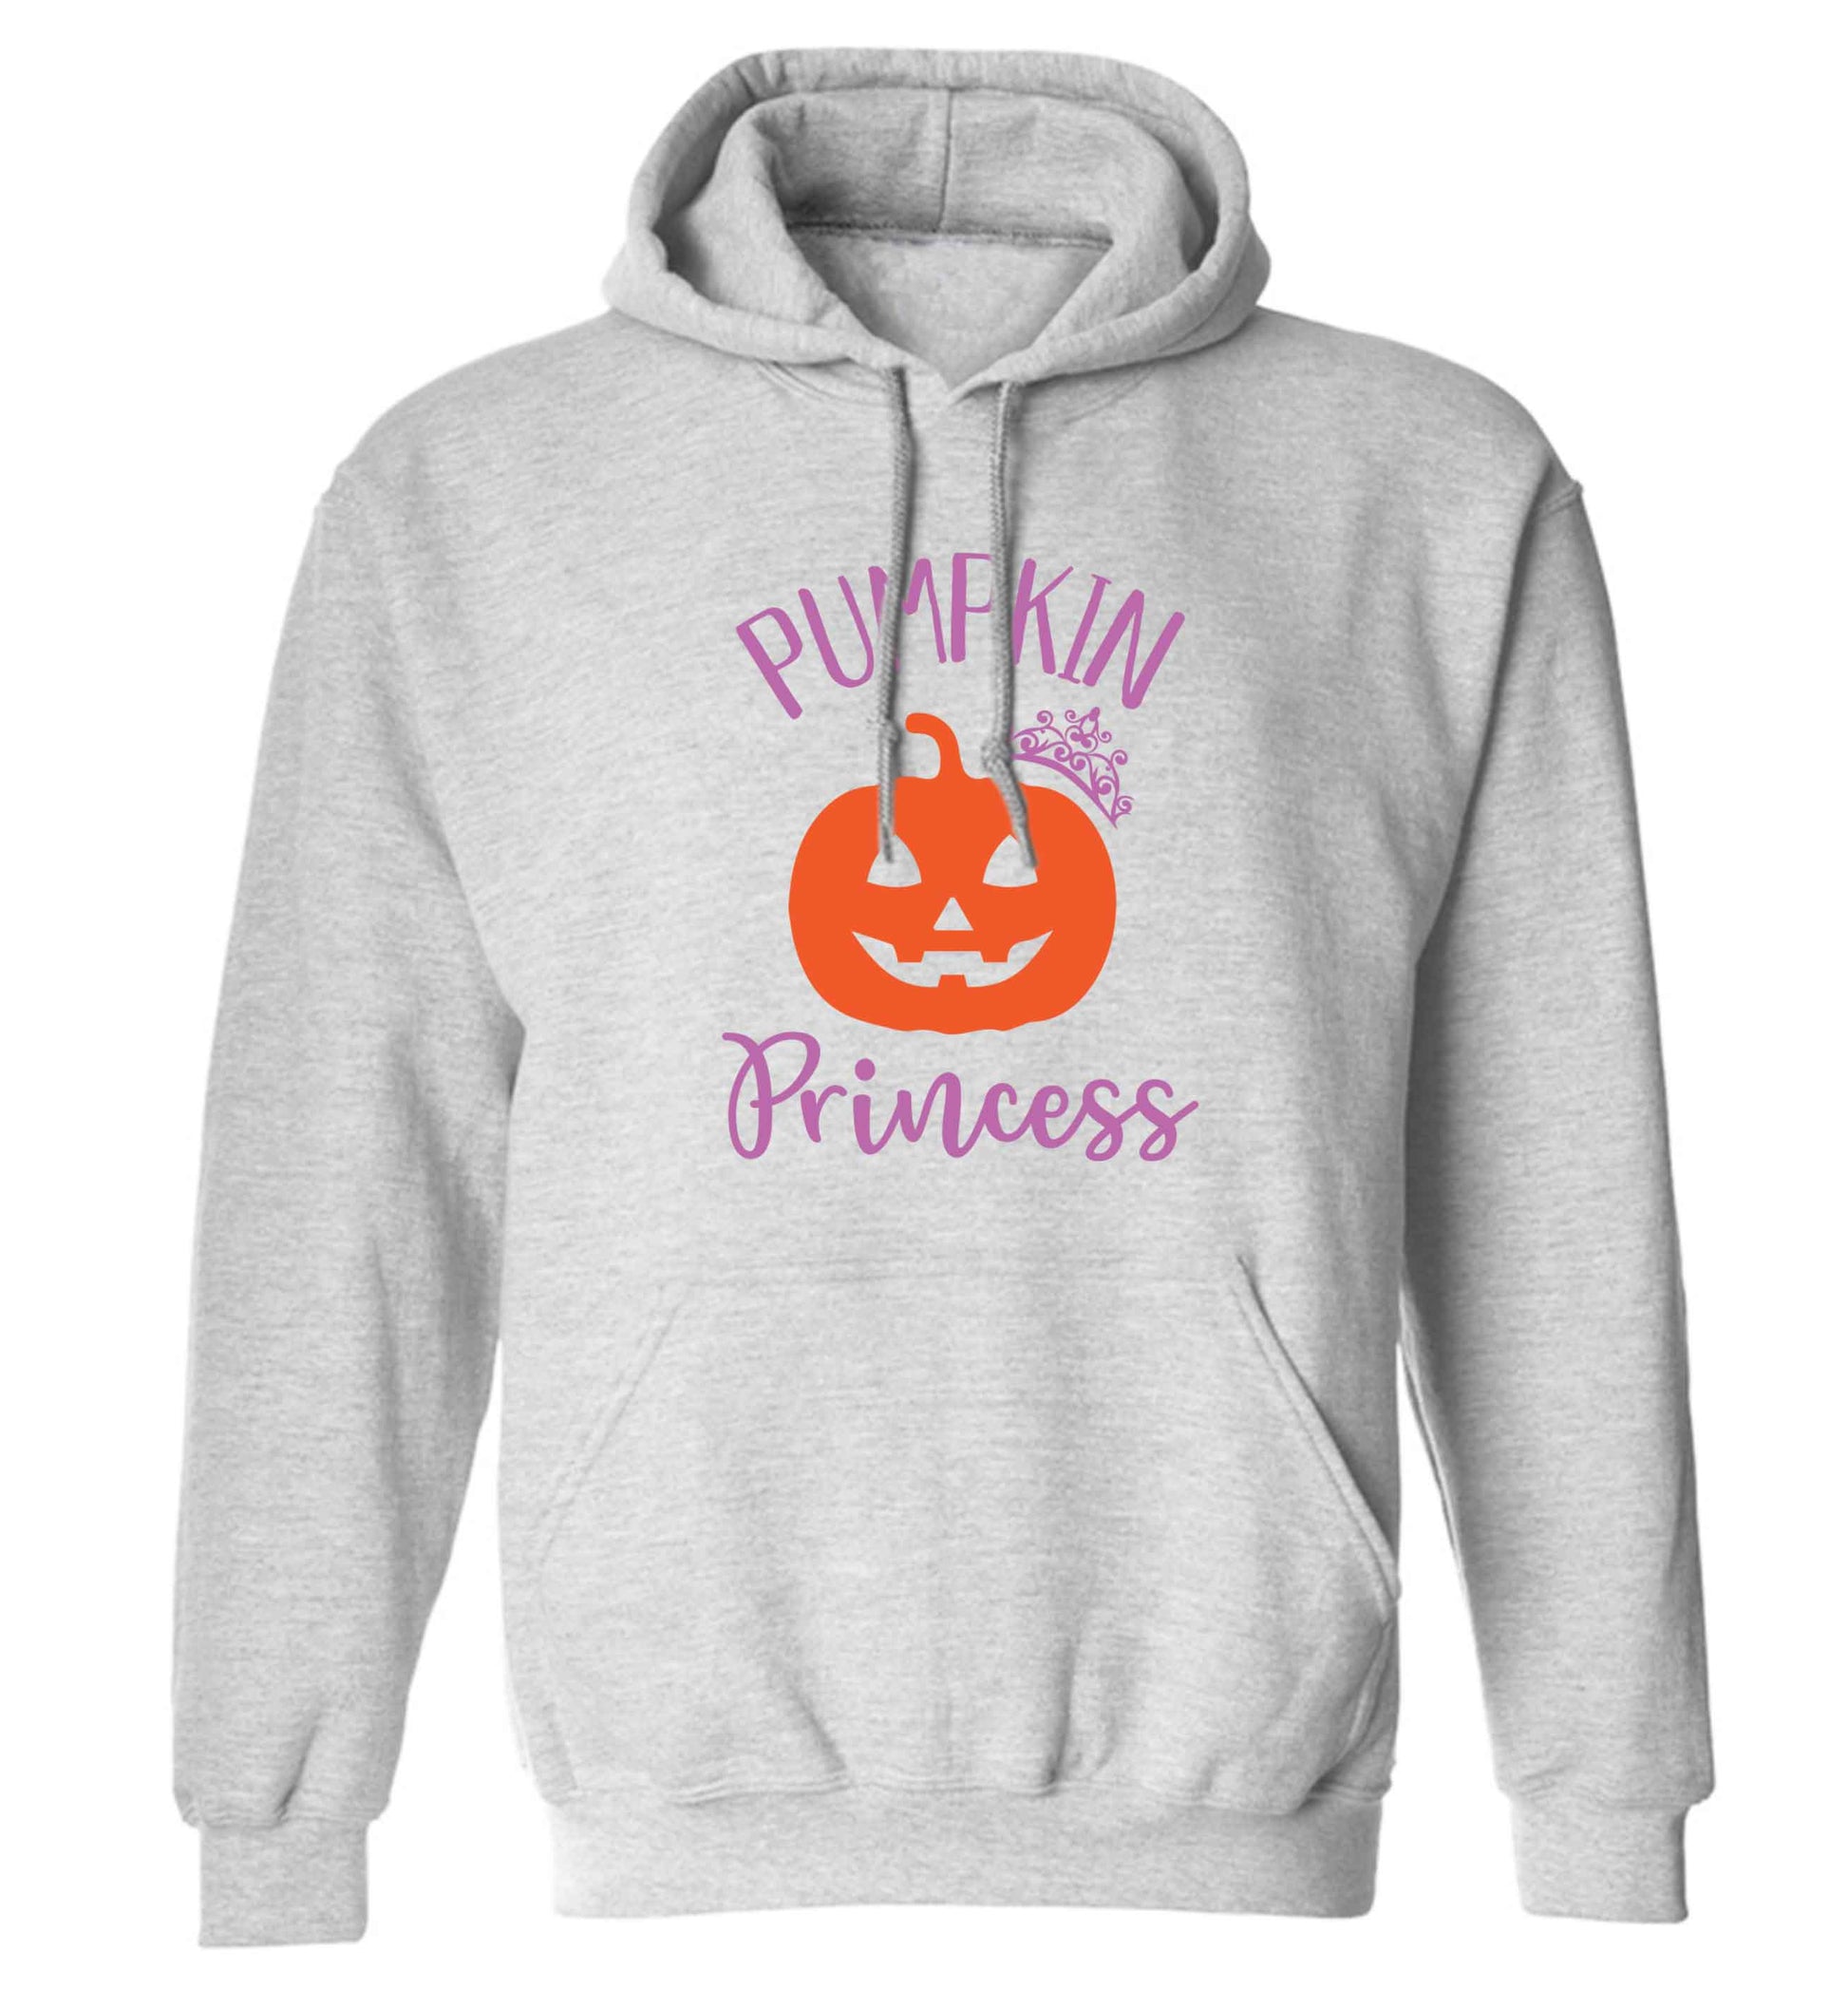 Happiness Pumpkin Spice adults unisex grey hoodie 2XL